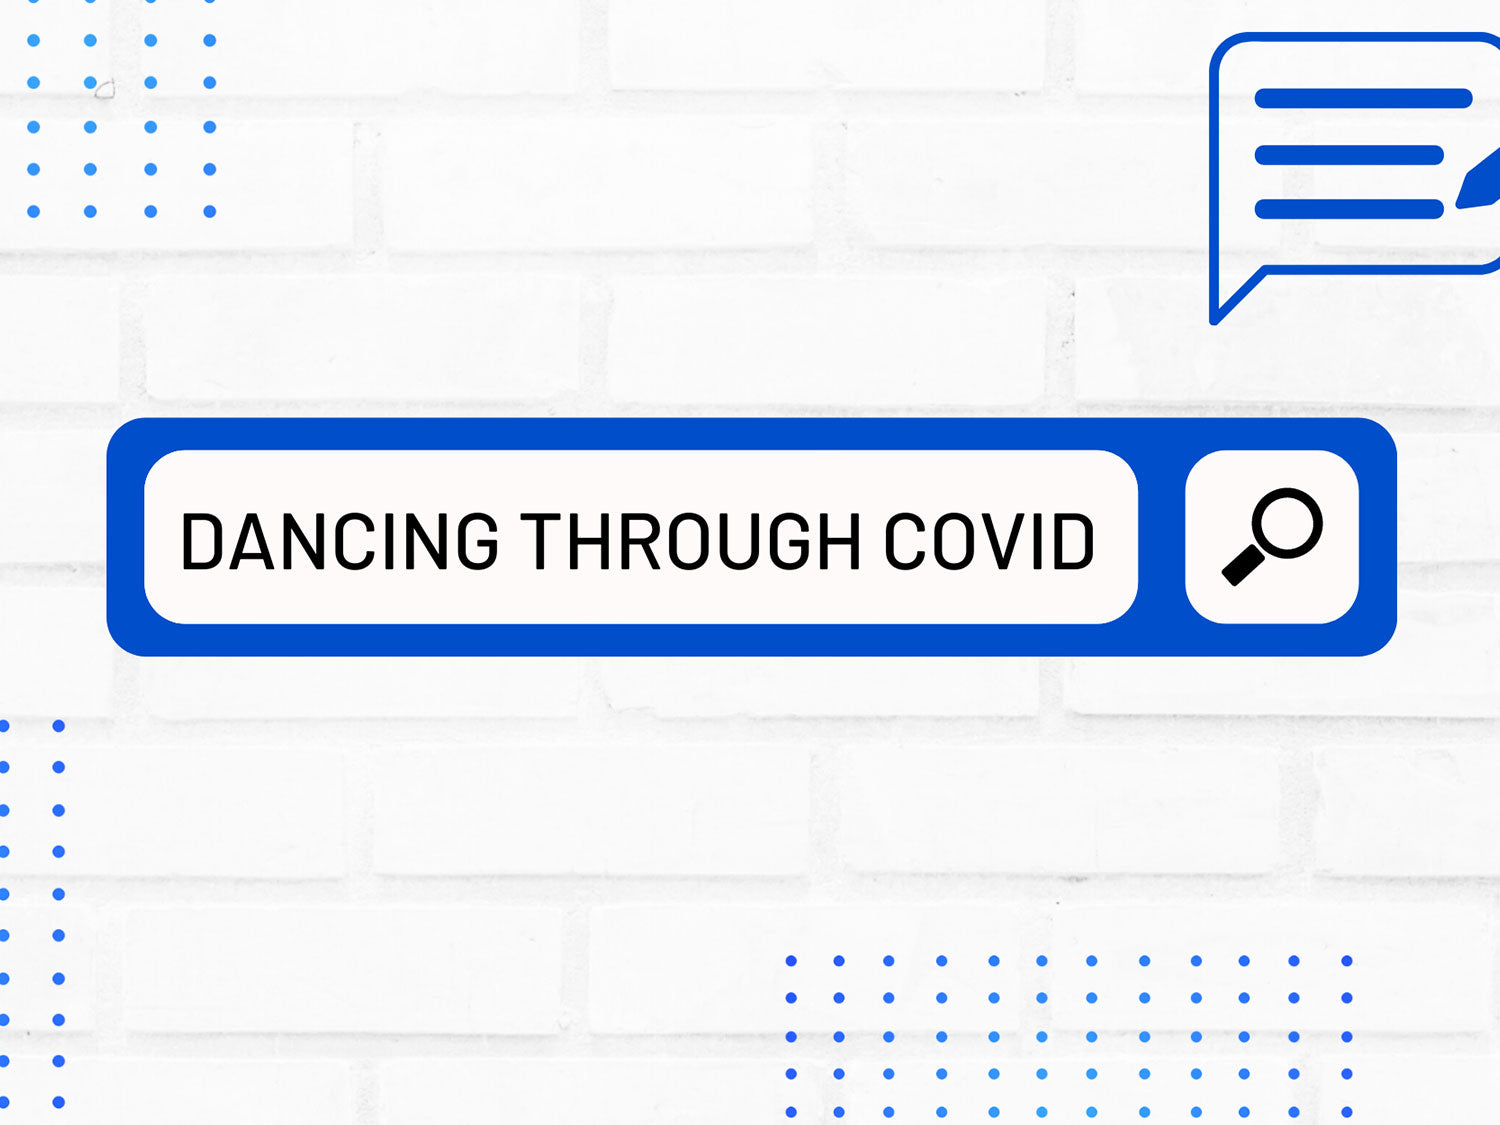 Dancing through the COVID-19 pandemic